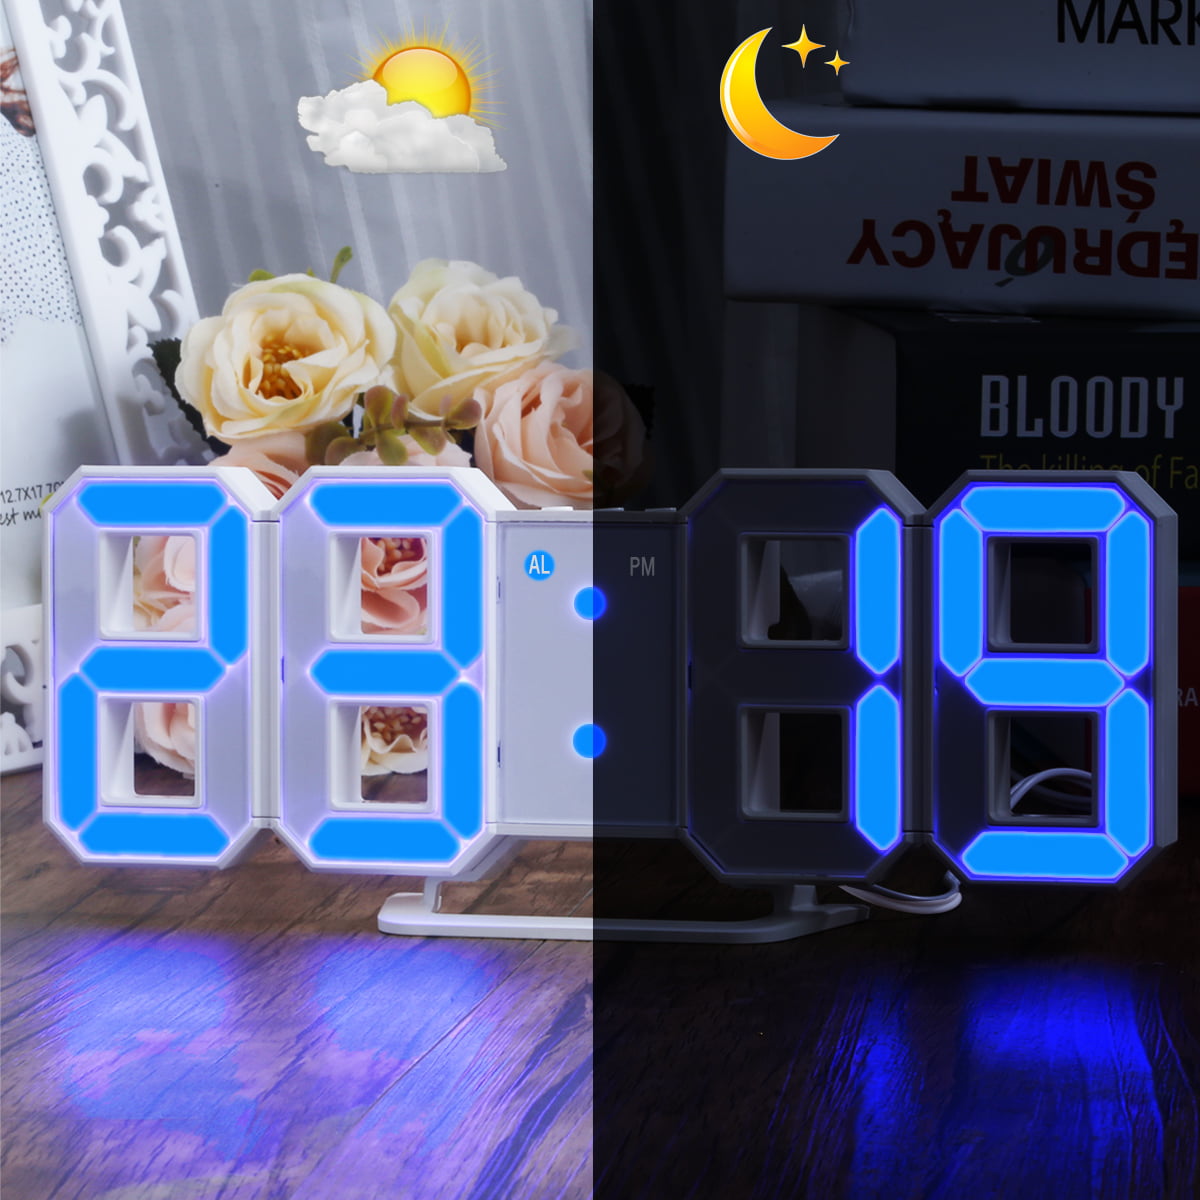 5V LED Digital Large Jumbo Snooze Wall Room Desk Alarm Clock Number Display 2019 